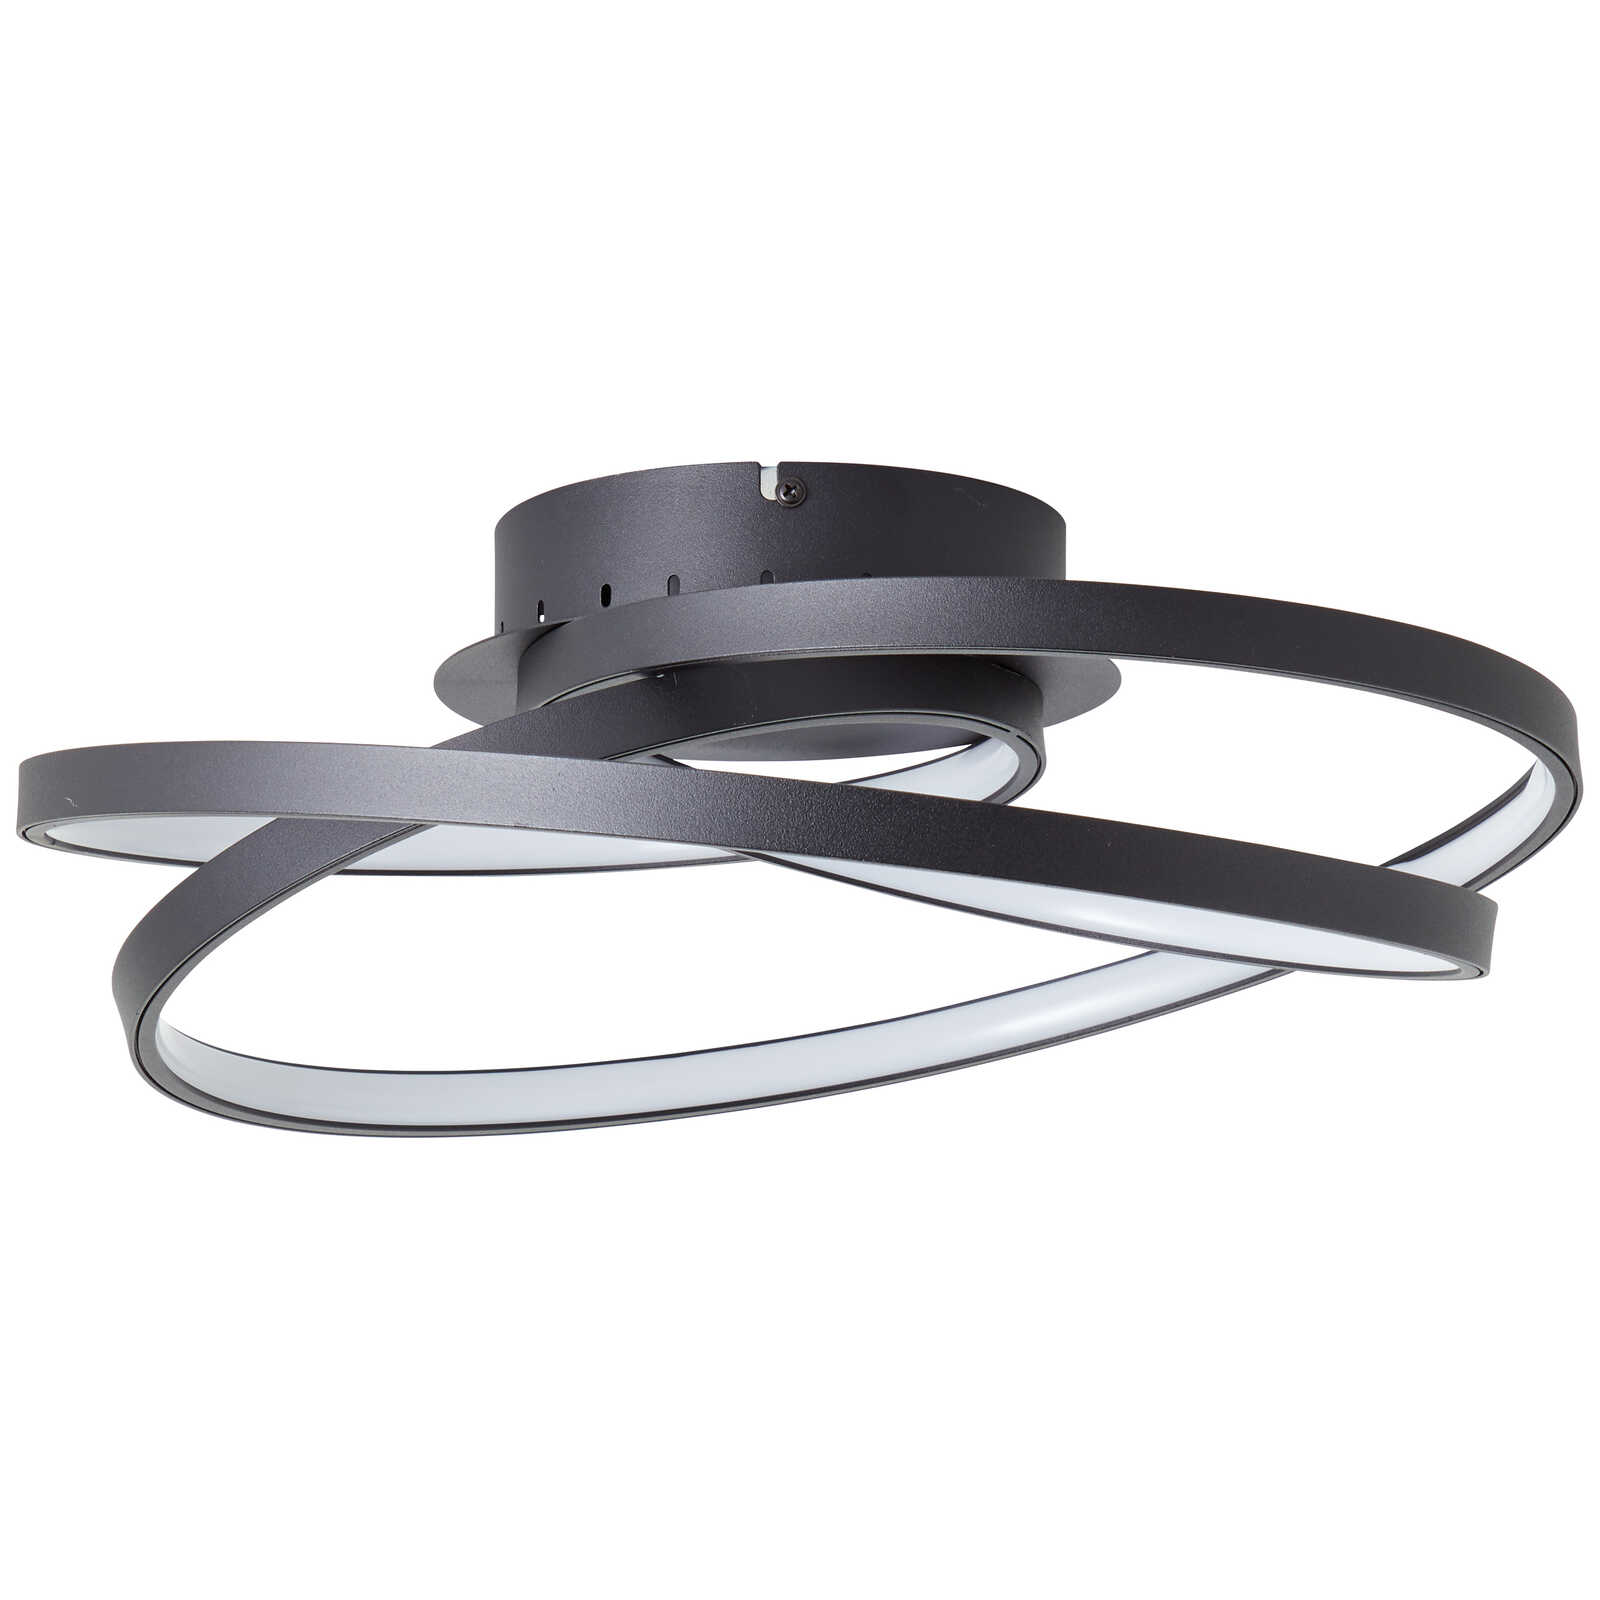             Metalen plafondlamp - Kilian 1 - Zwart
        